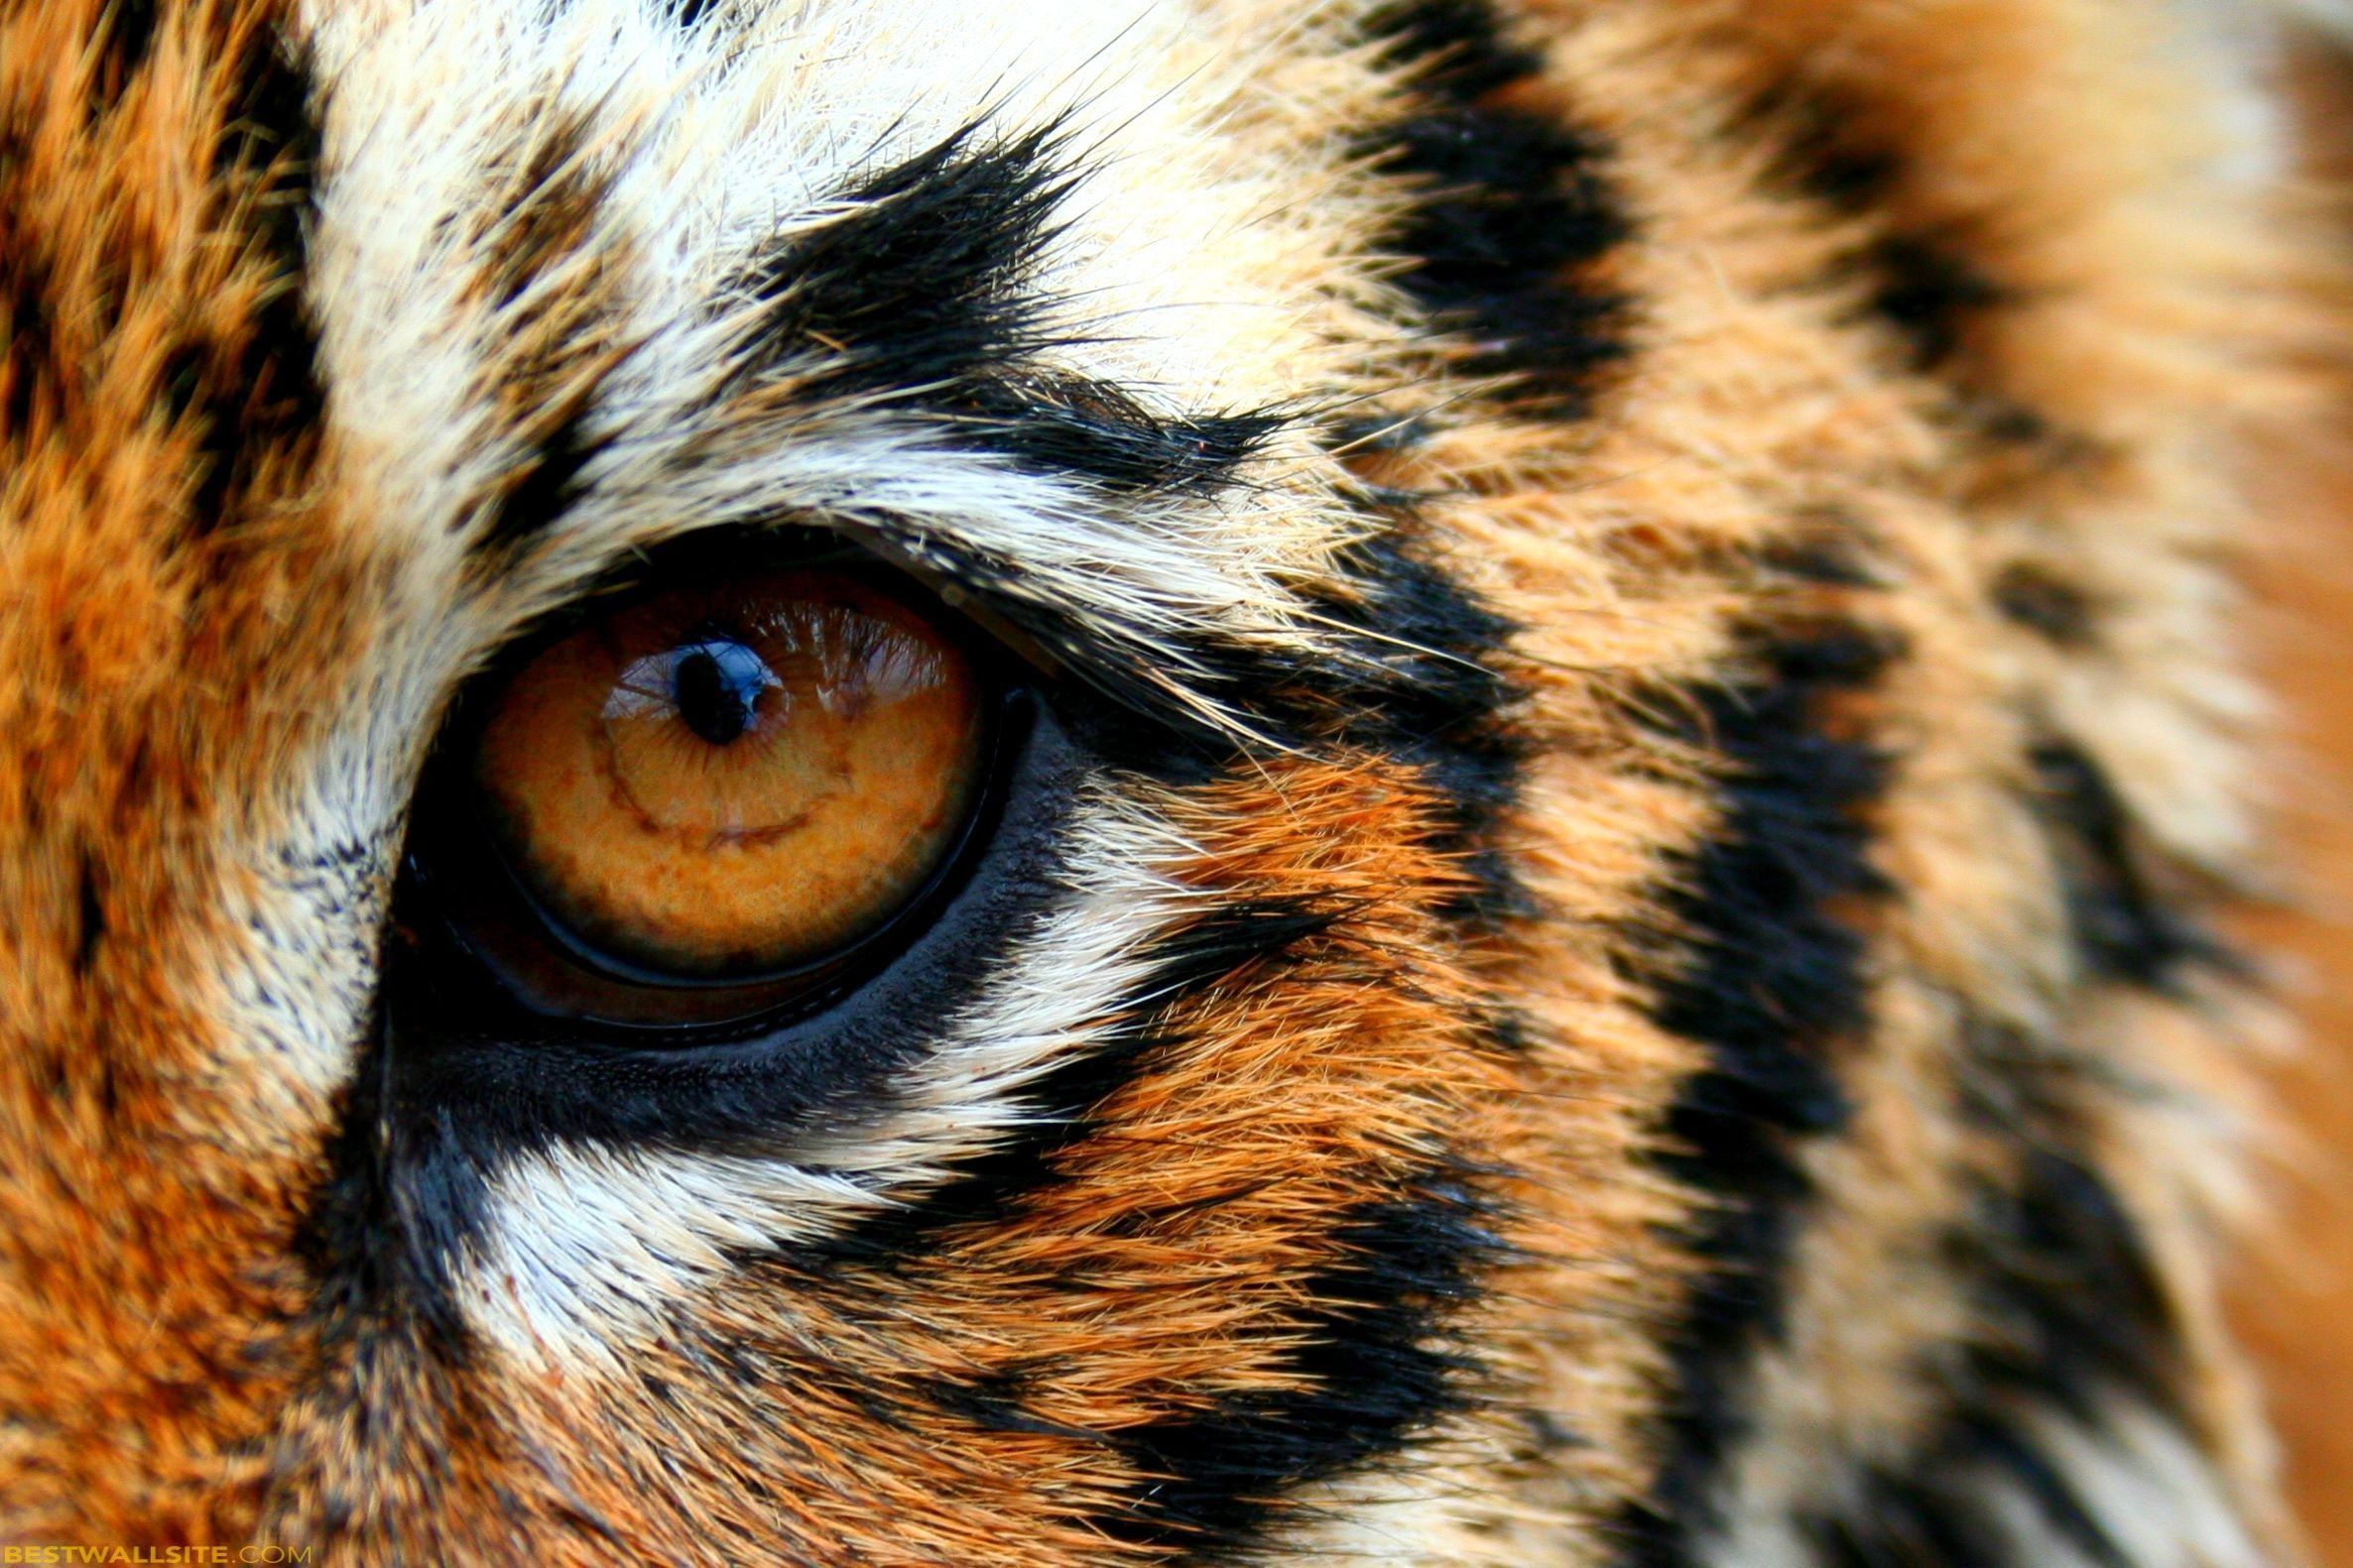 Eye Of The Tiger | BestWallSite.com